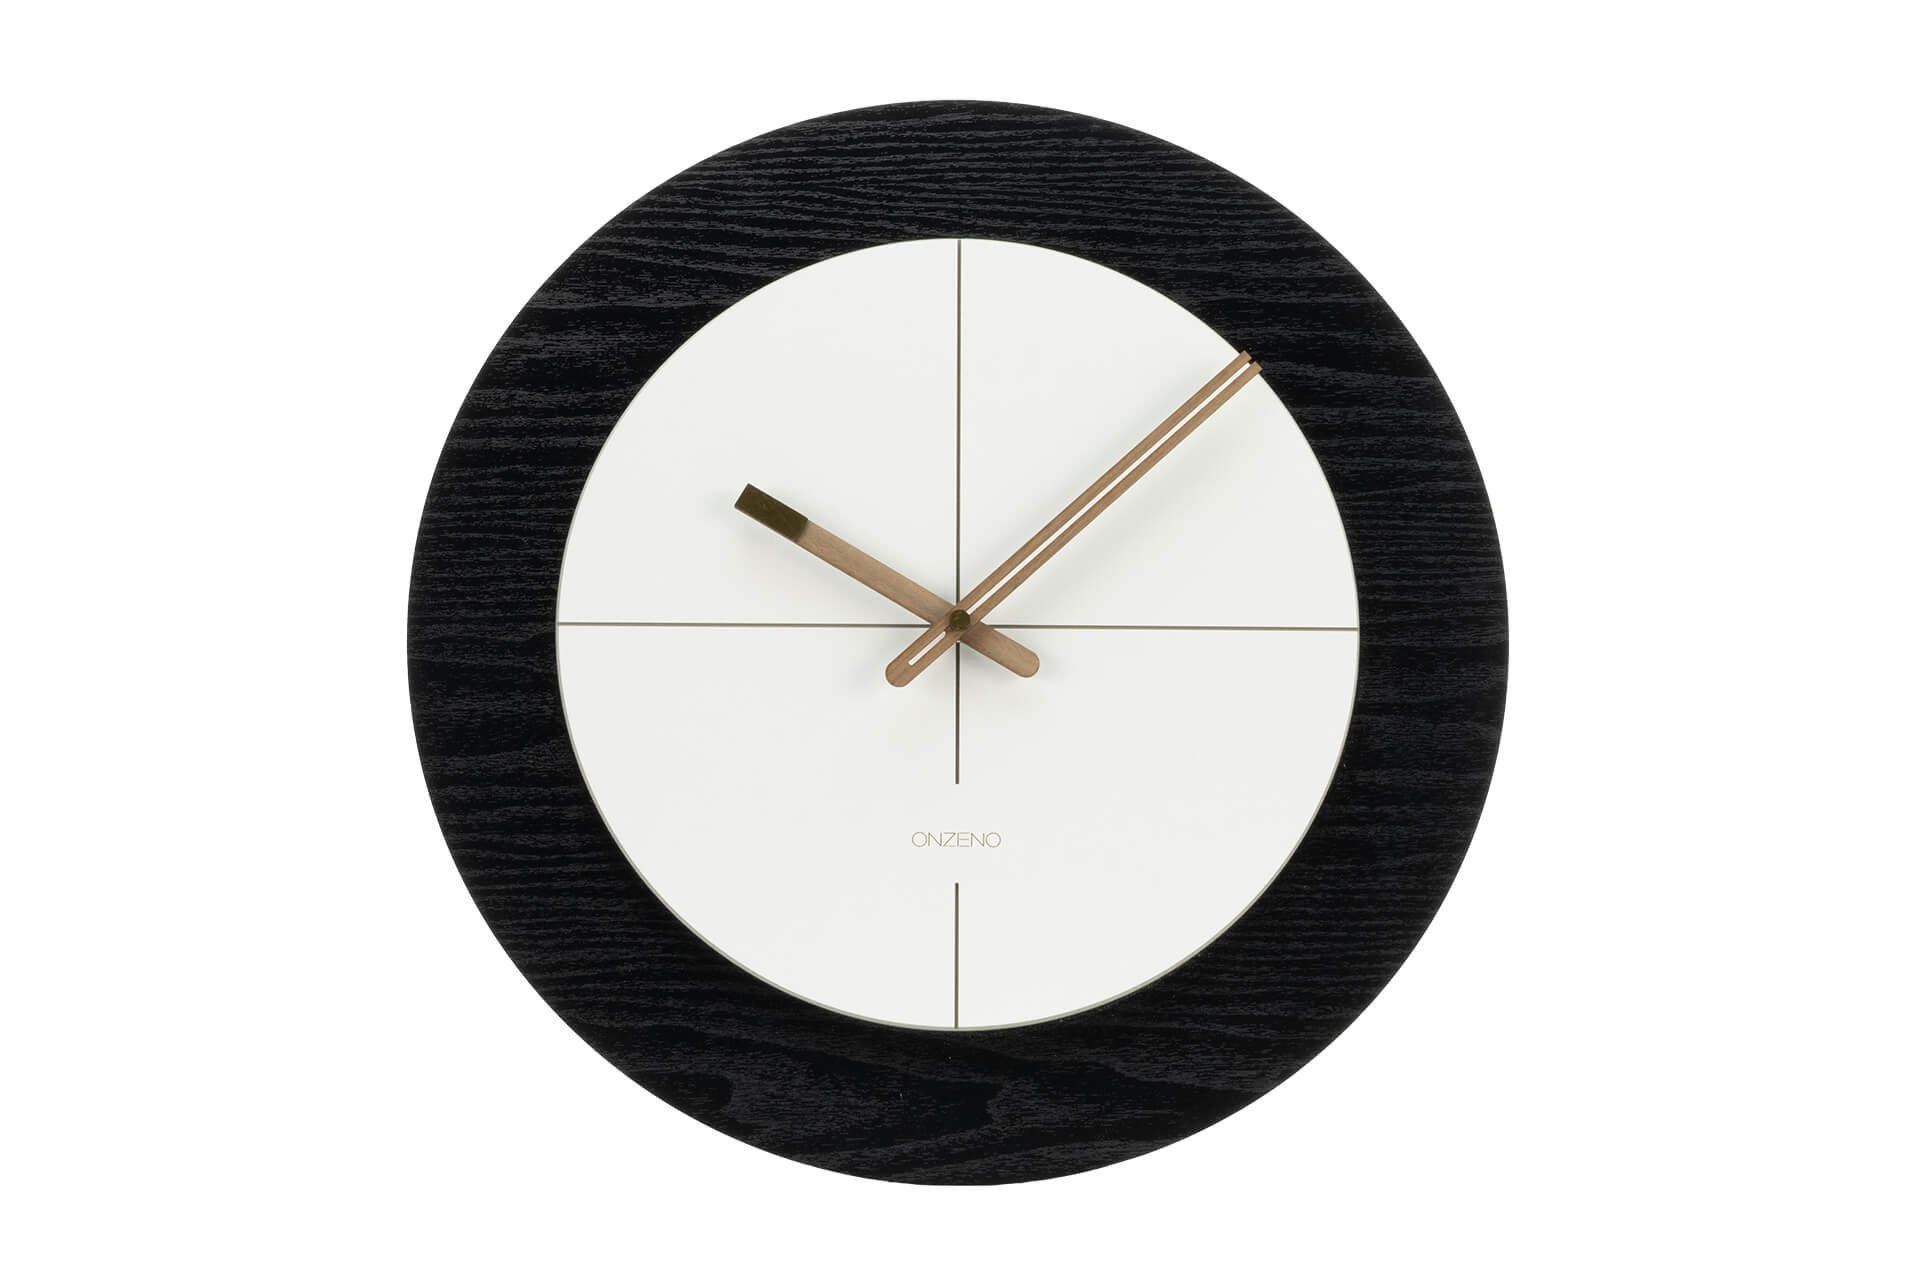 ONZENO Wanduhr THE CONFIDENT. 40x40x0.9 cm (handgefertigte Design-Uhr)